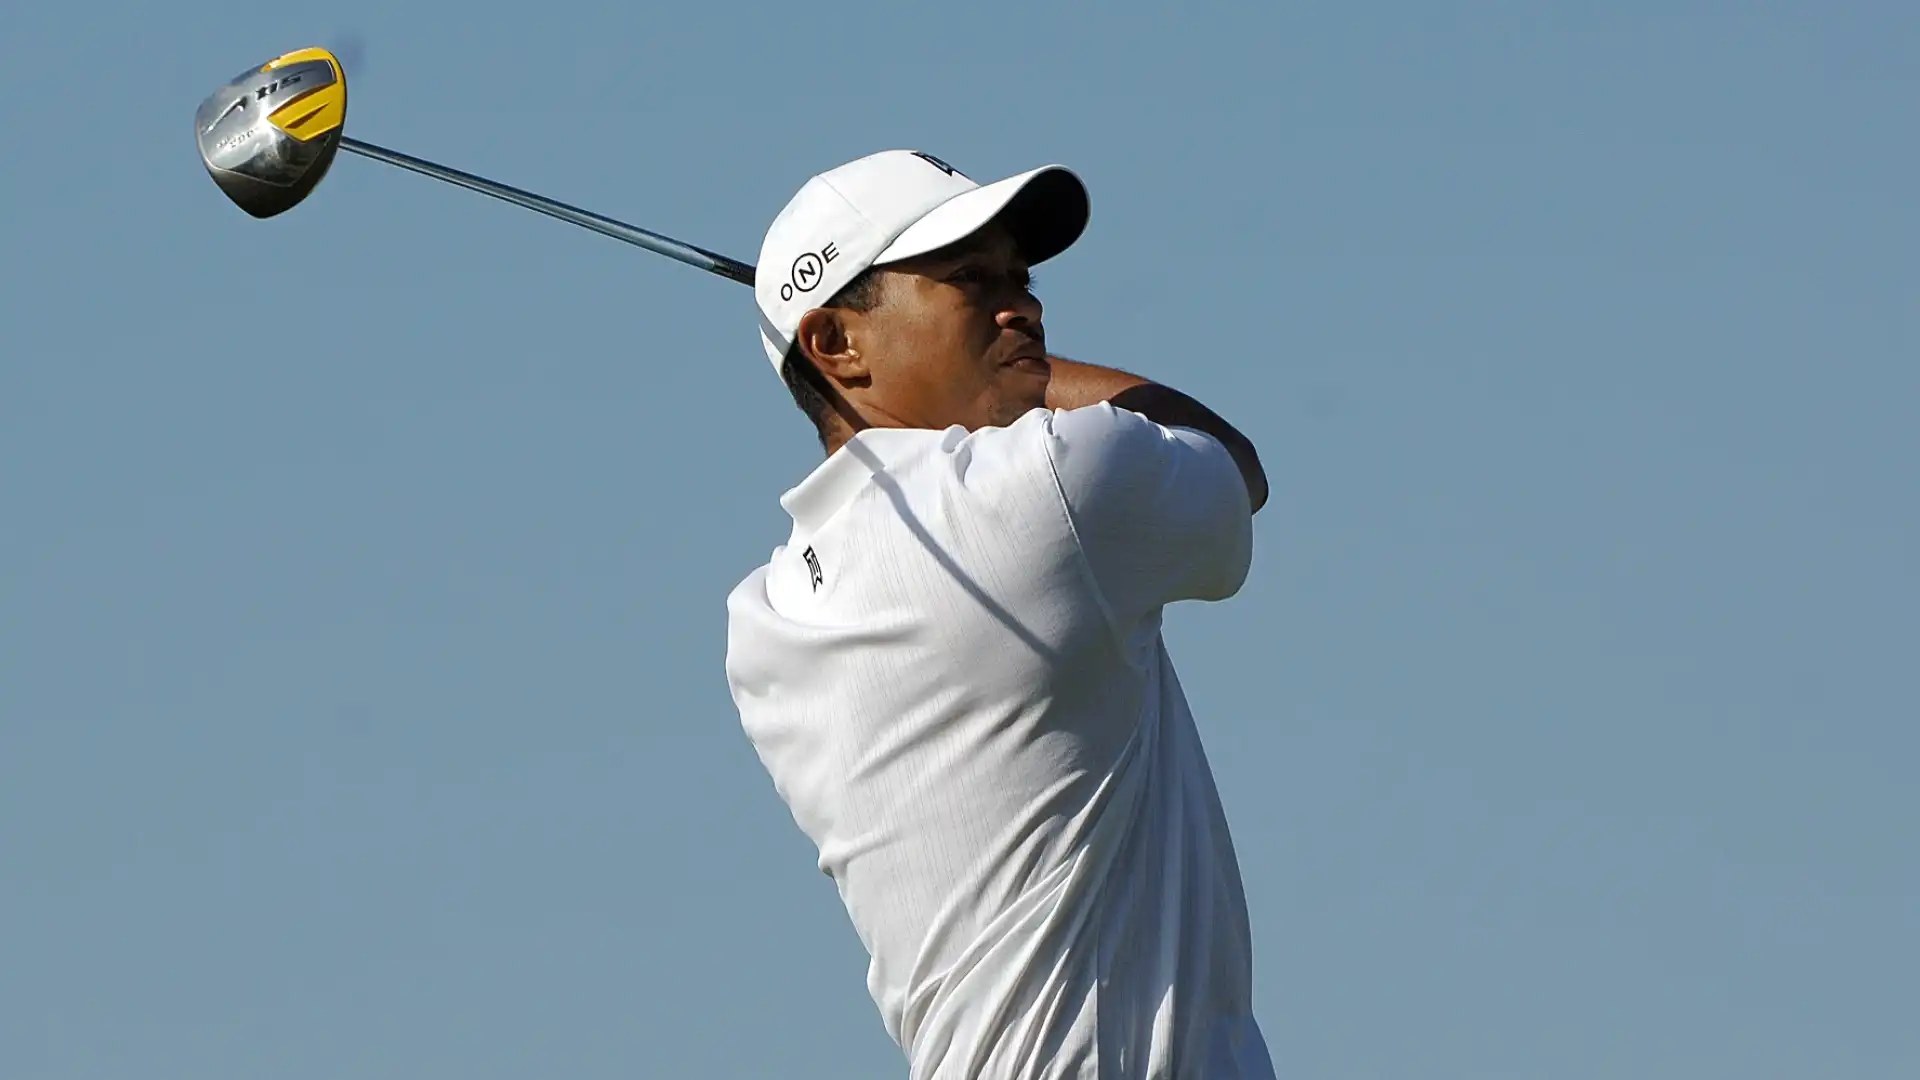 2006: Tiger Woods (Golf), guadagni totali stimati 90 milioni di dollari